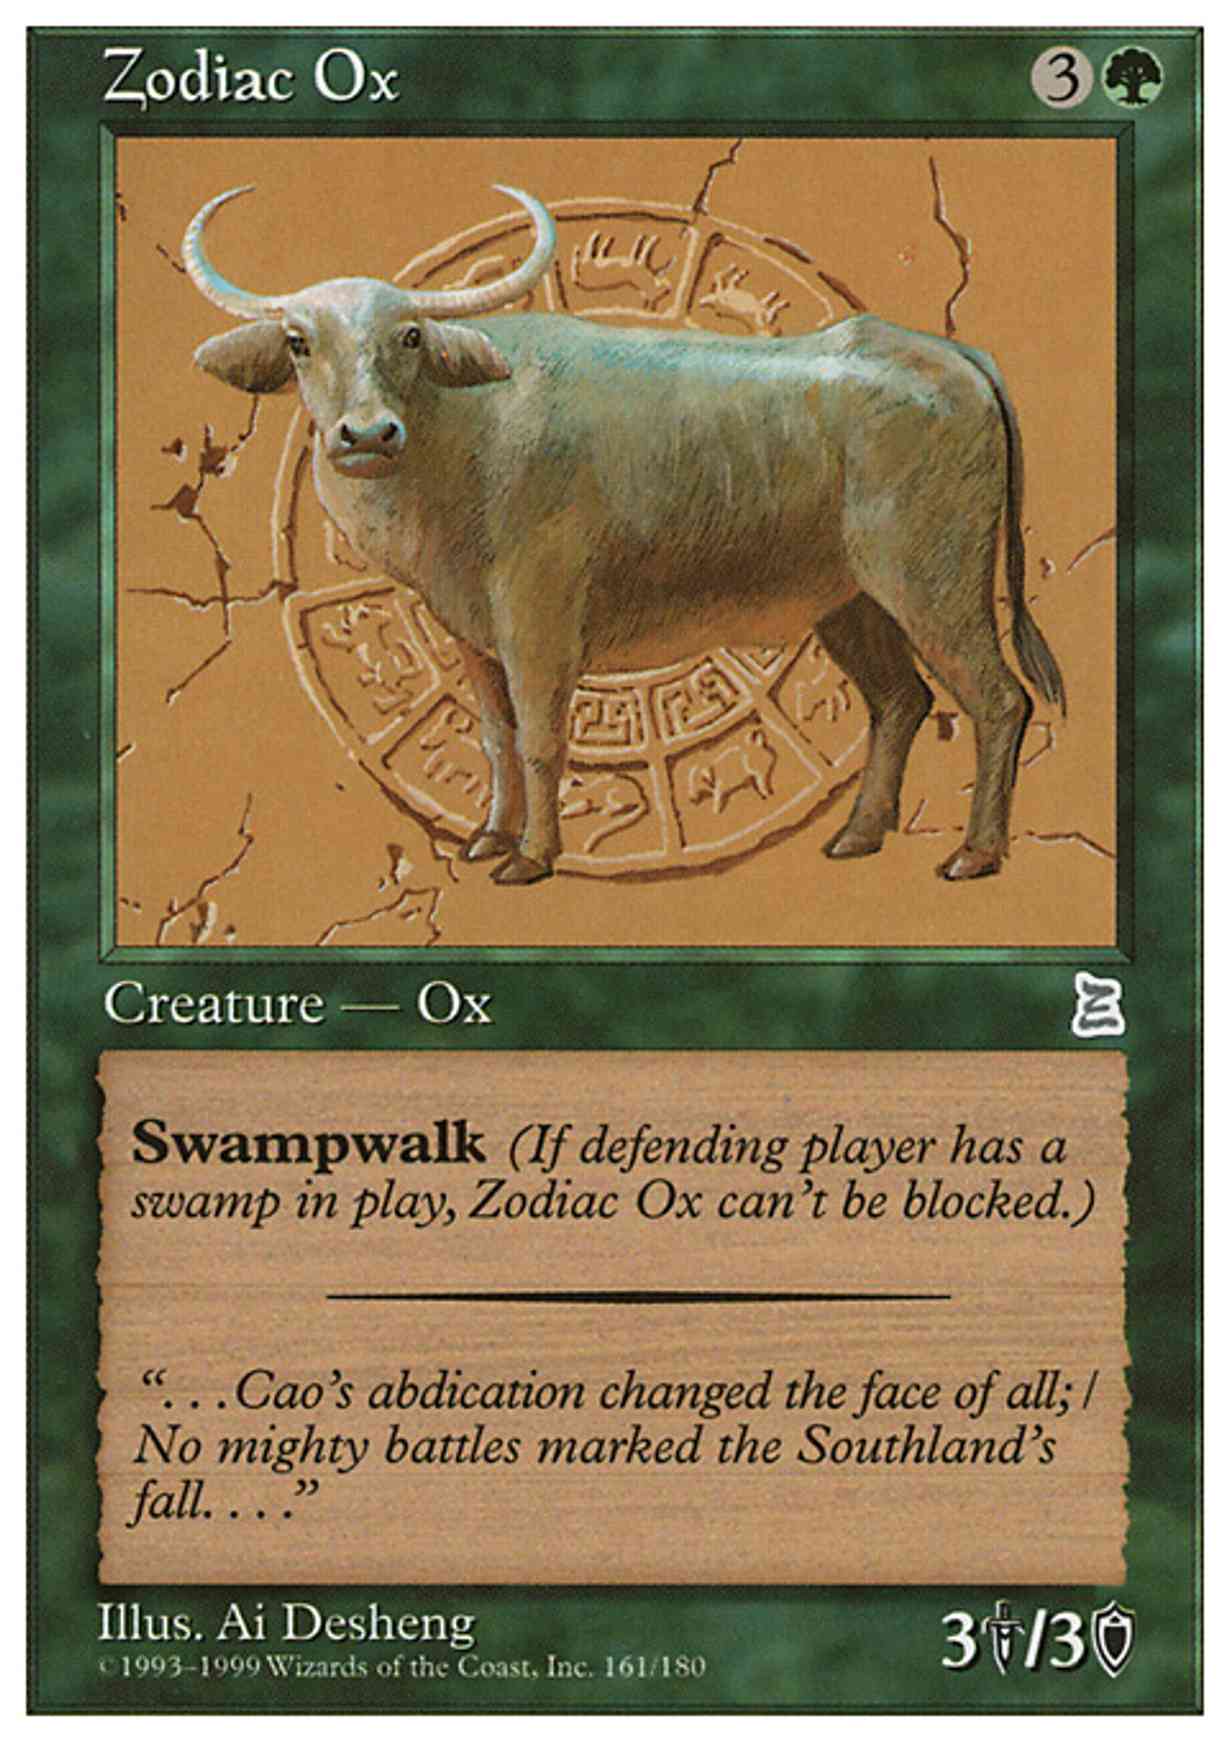 Zodiac Ox magic card front